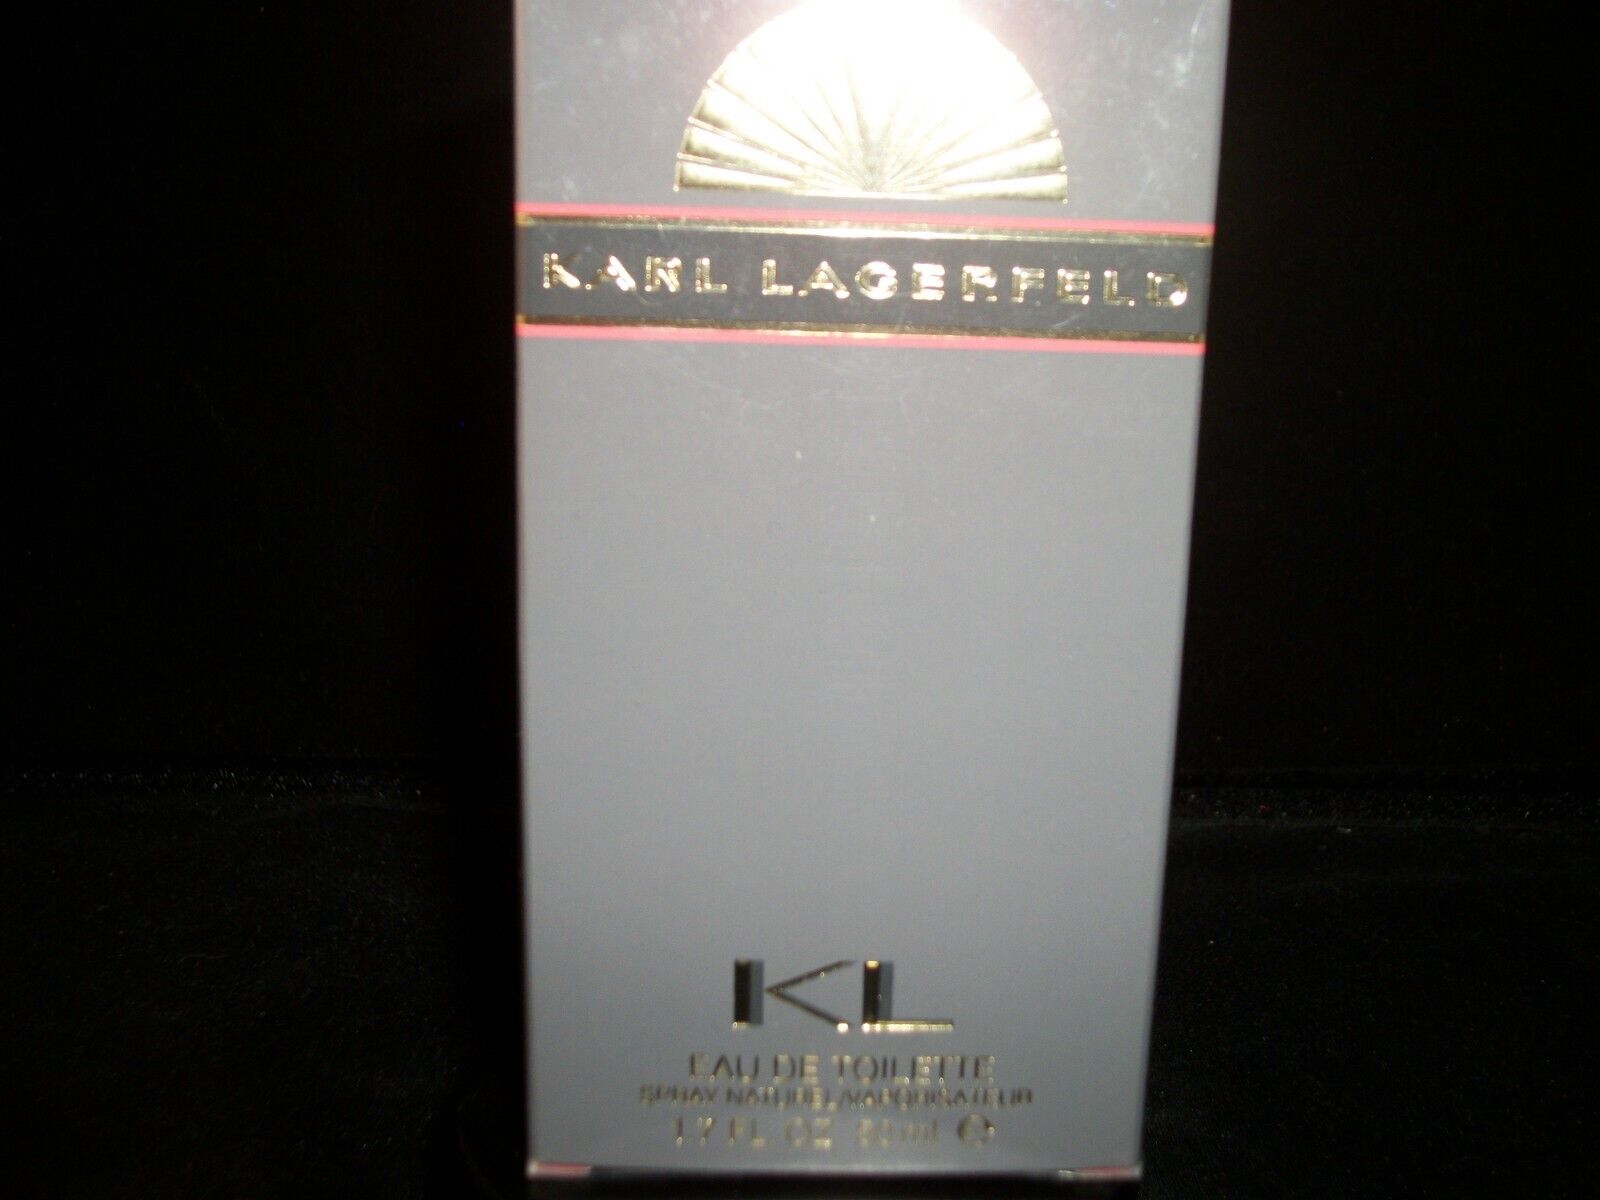  KL Eau De Toilette Karl Lagerfeld 1.7 oz For Women Smells Fantastic 